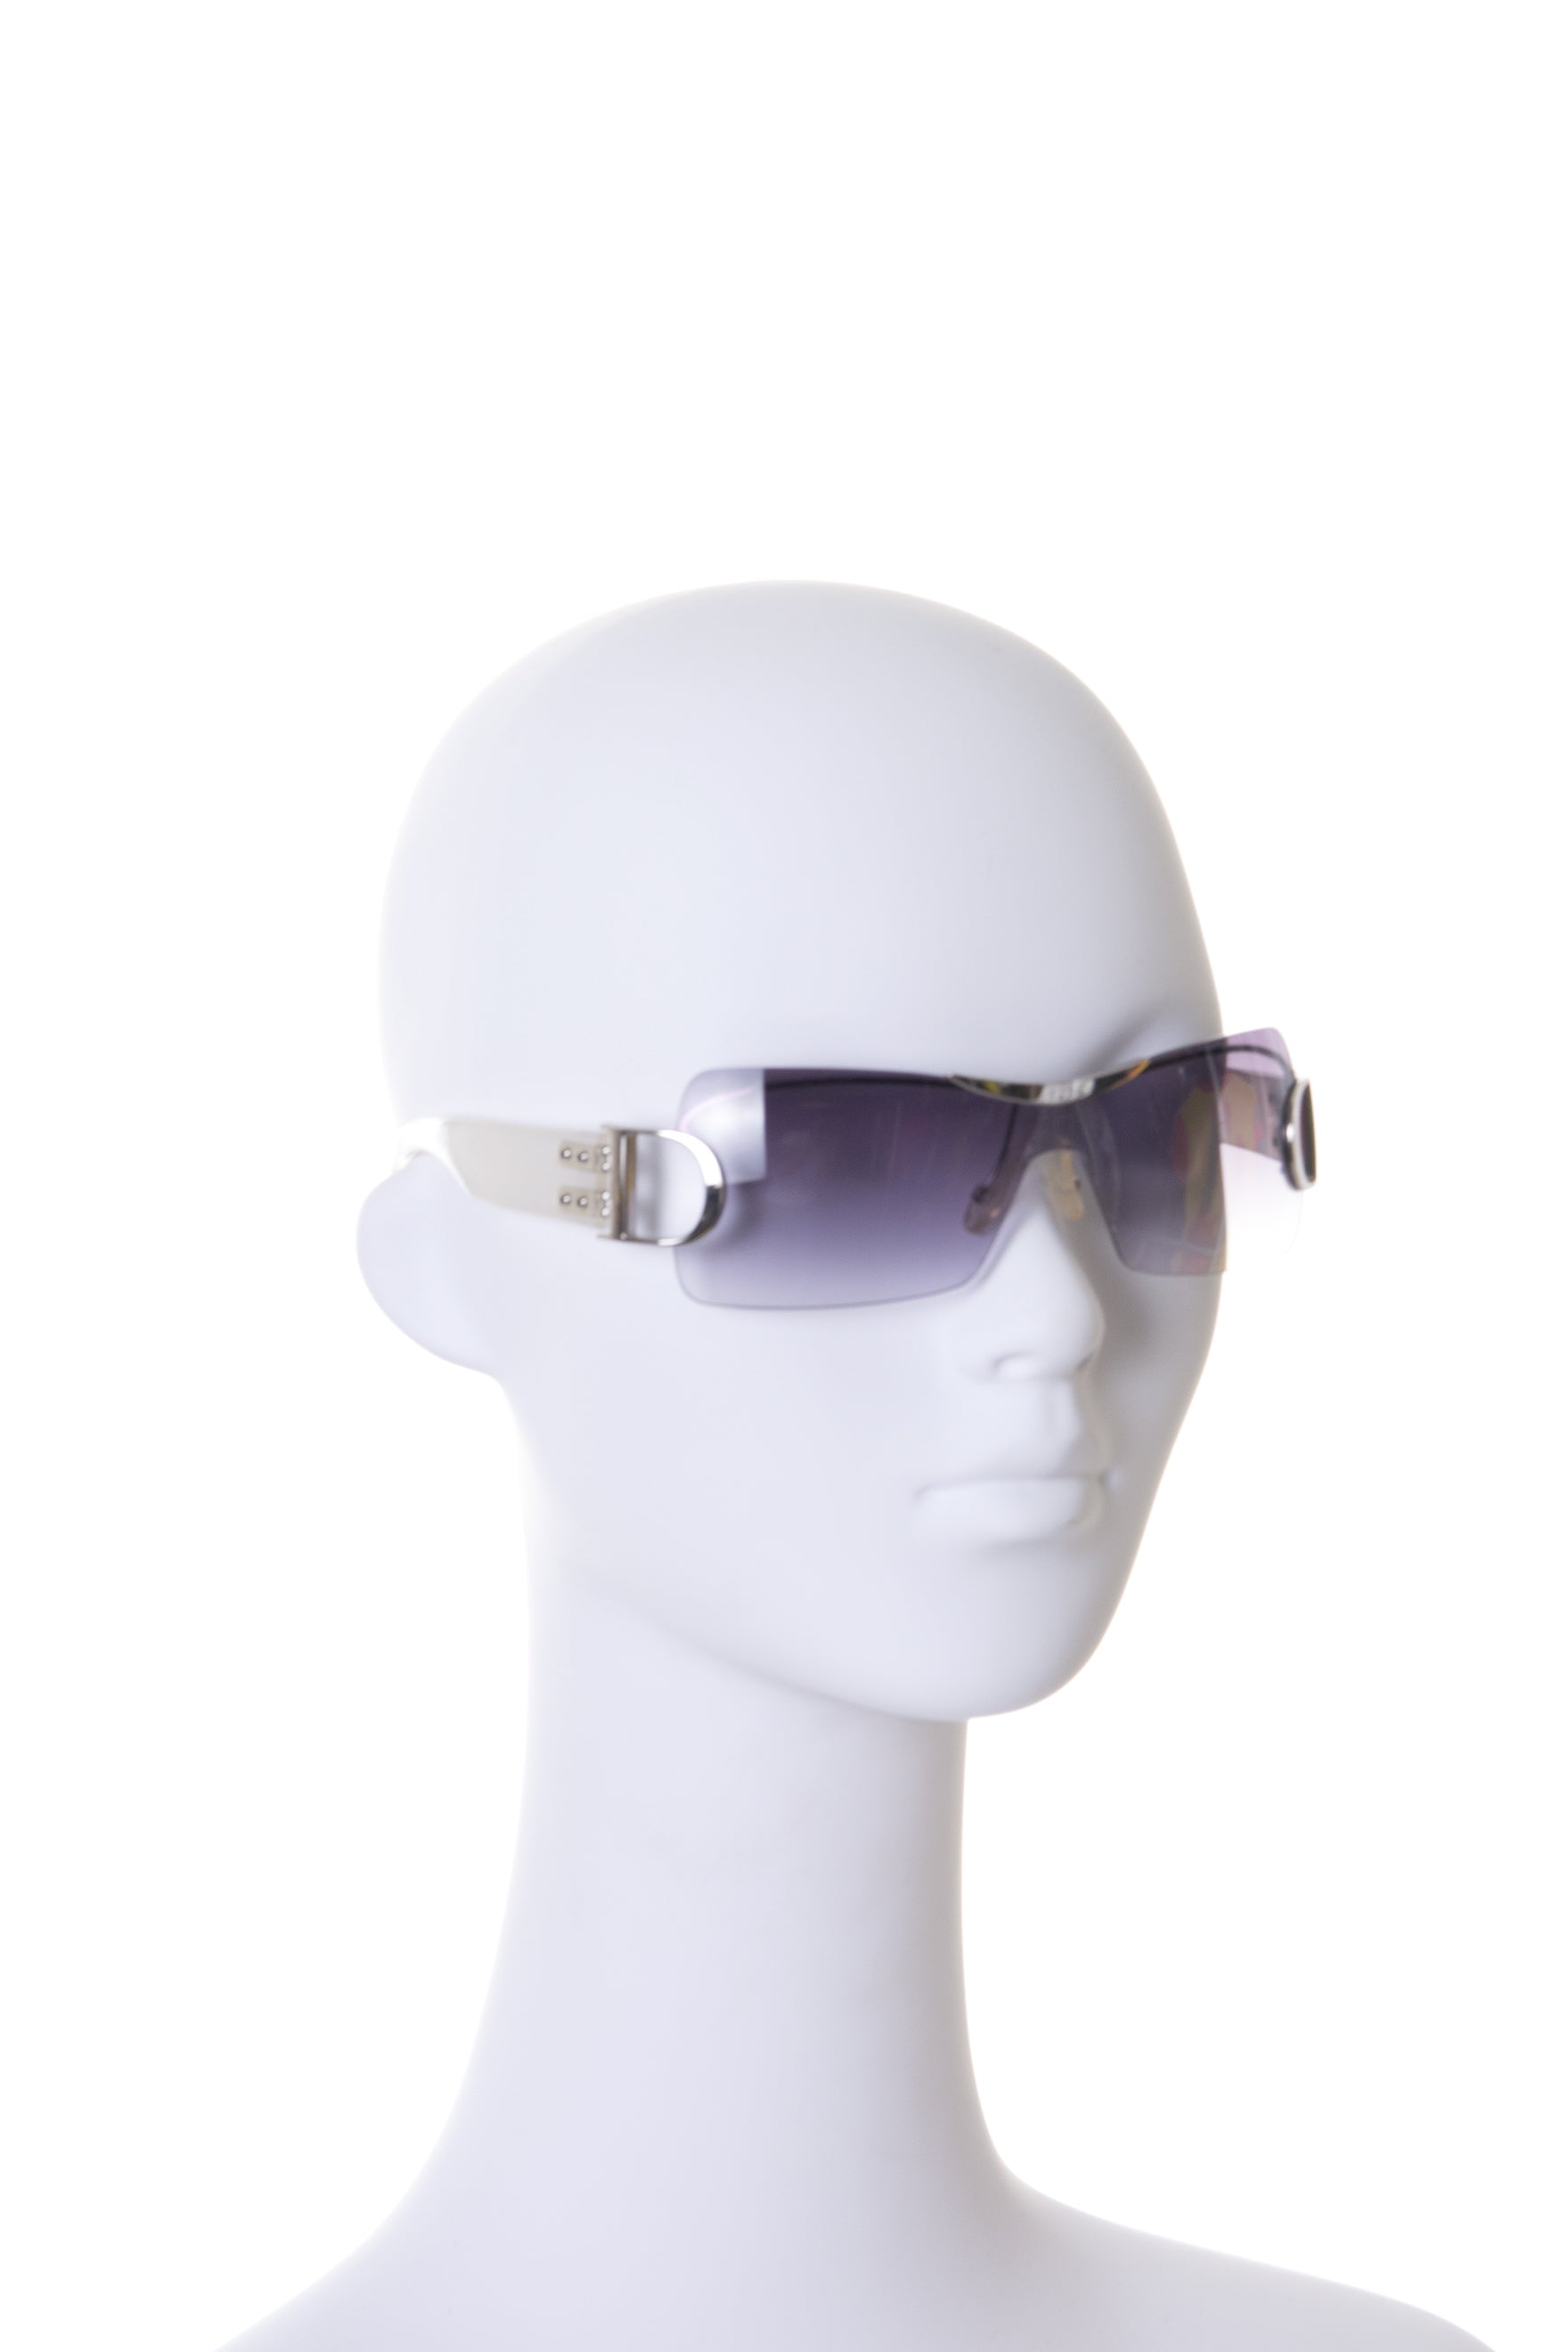 dior airspeed sunglasses